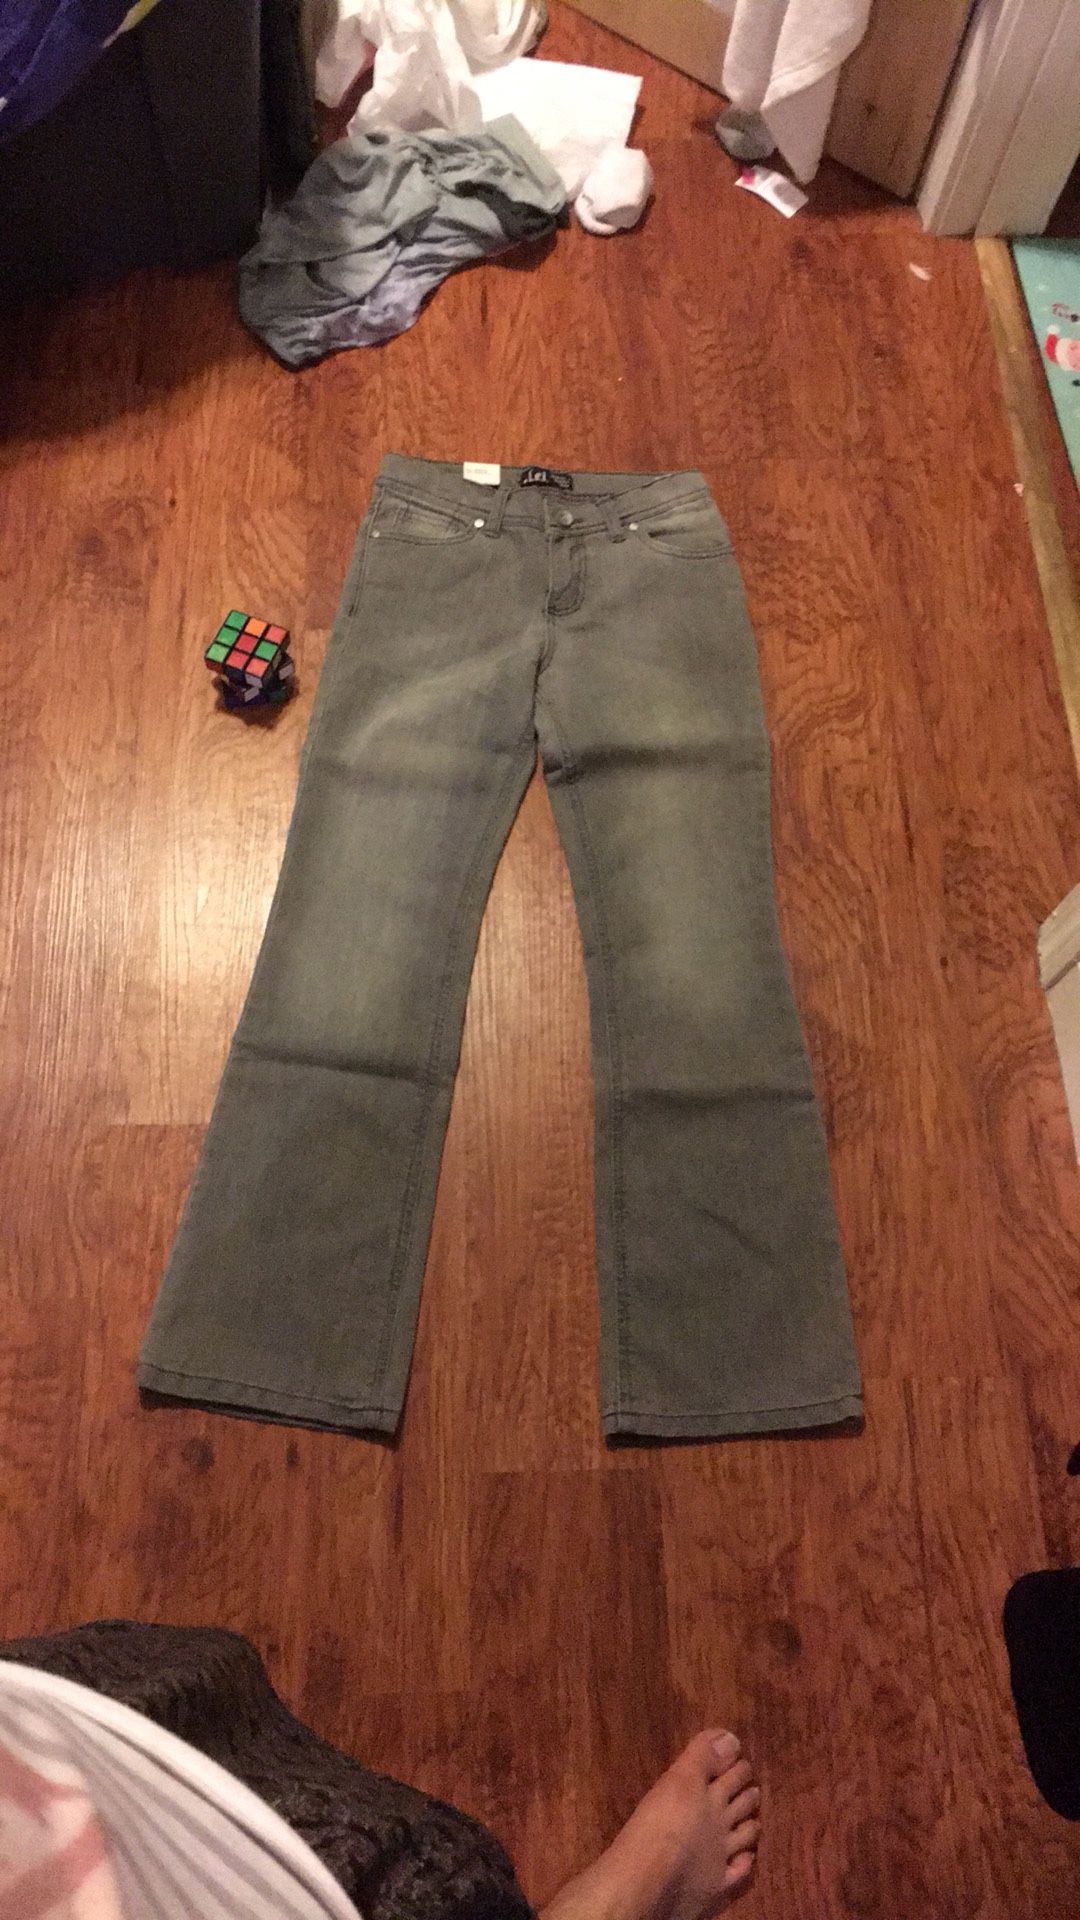 L.e.i Jeans size 12 regular/ 26” waist